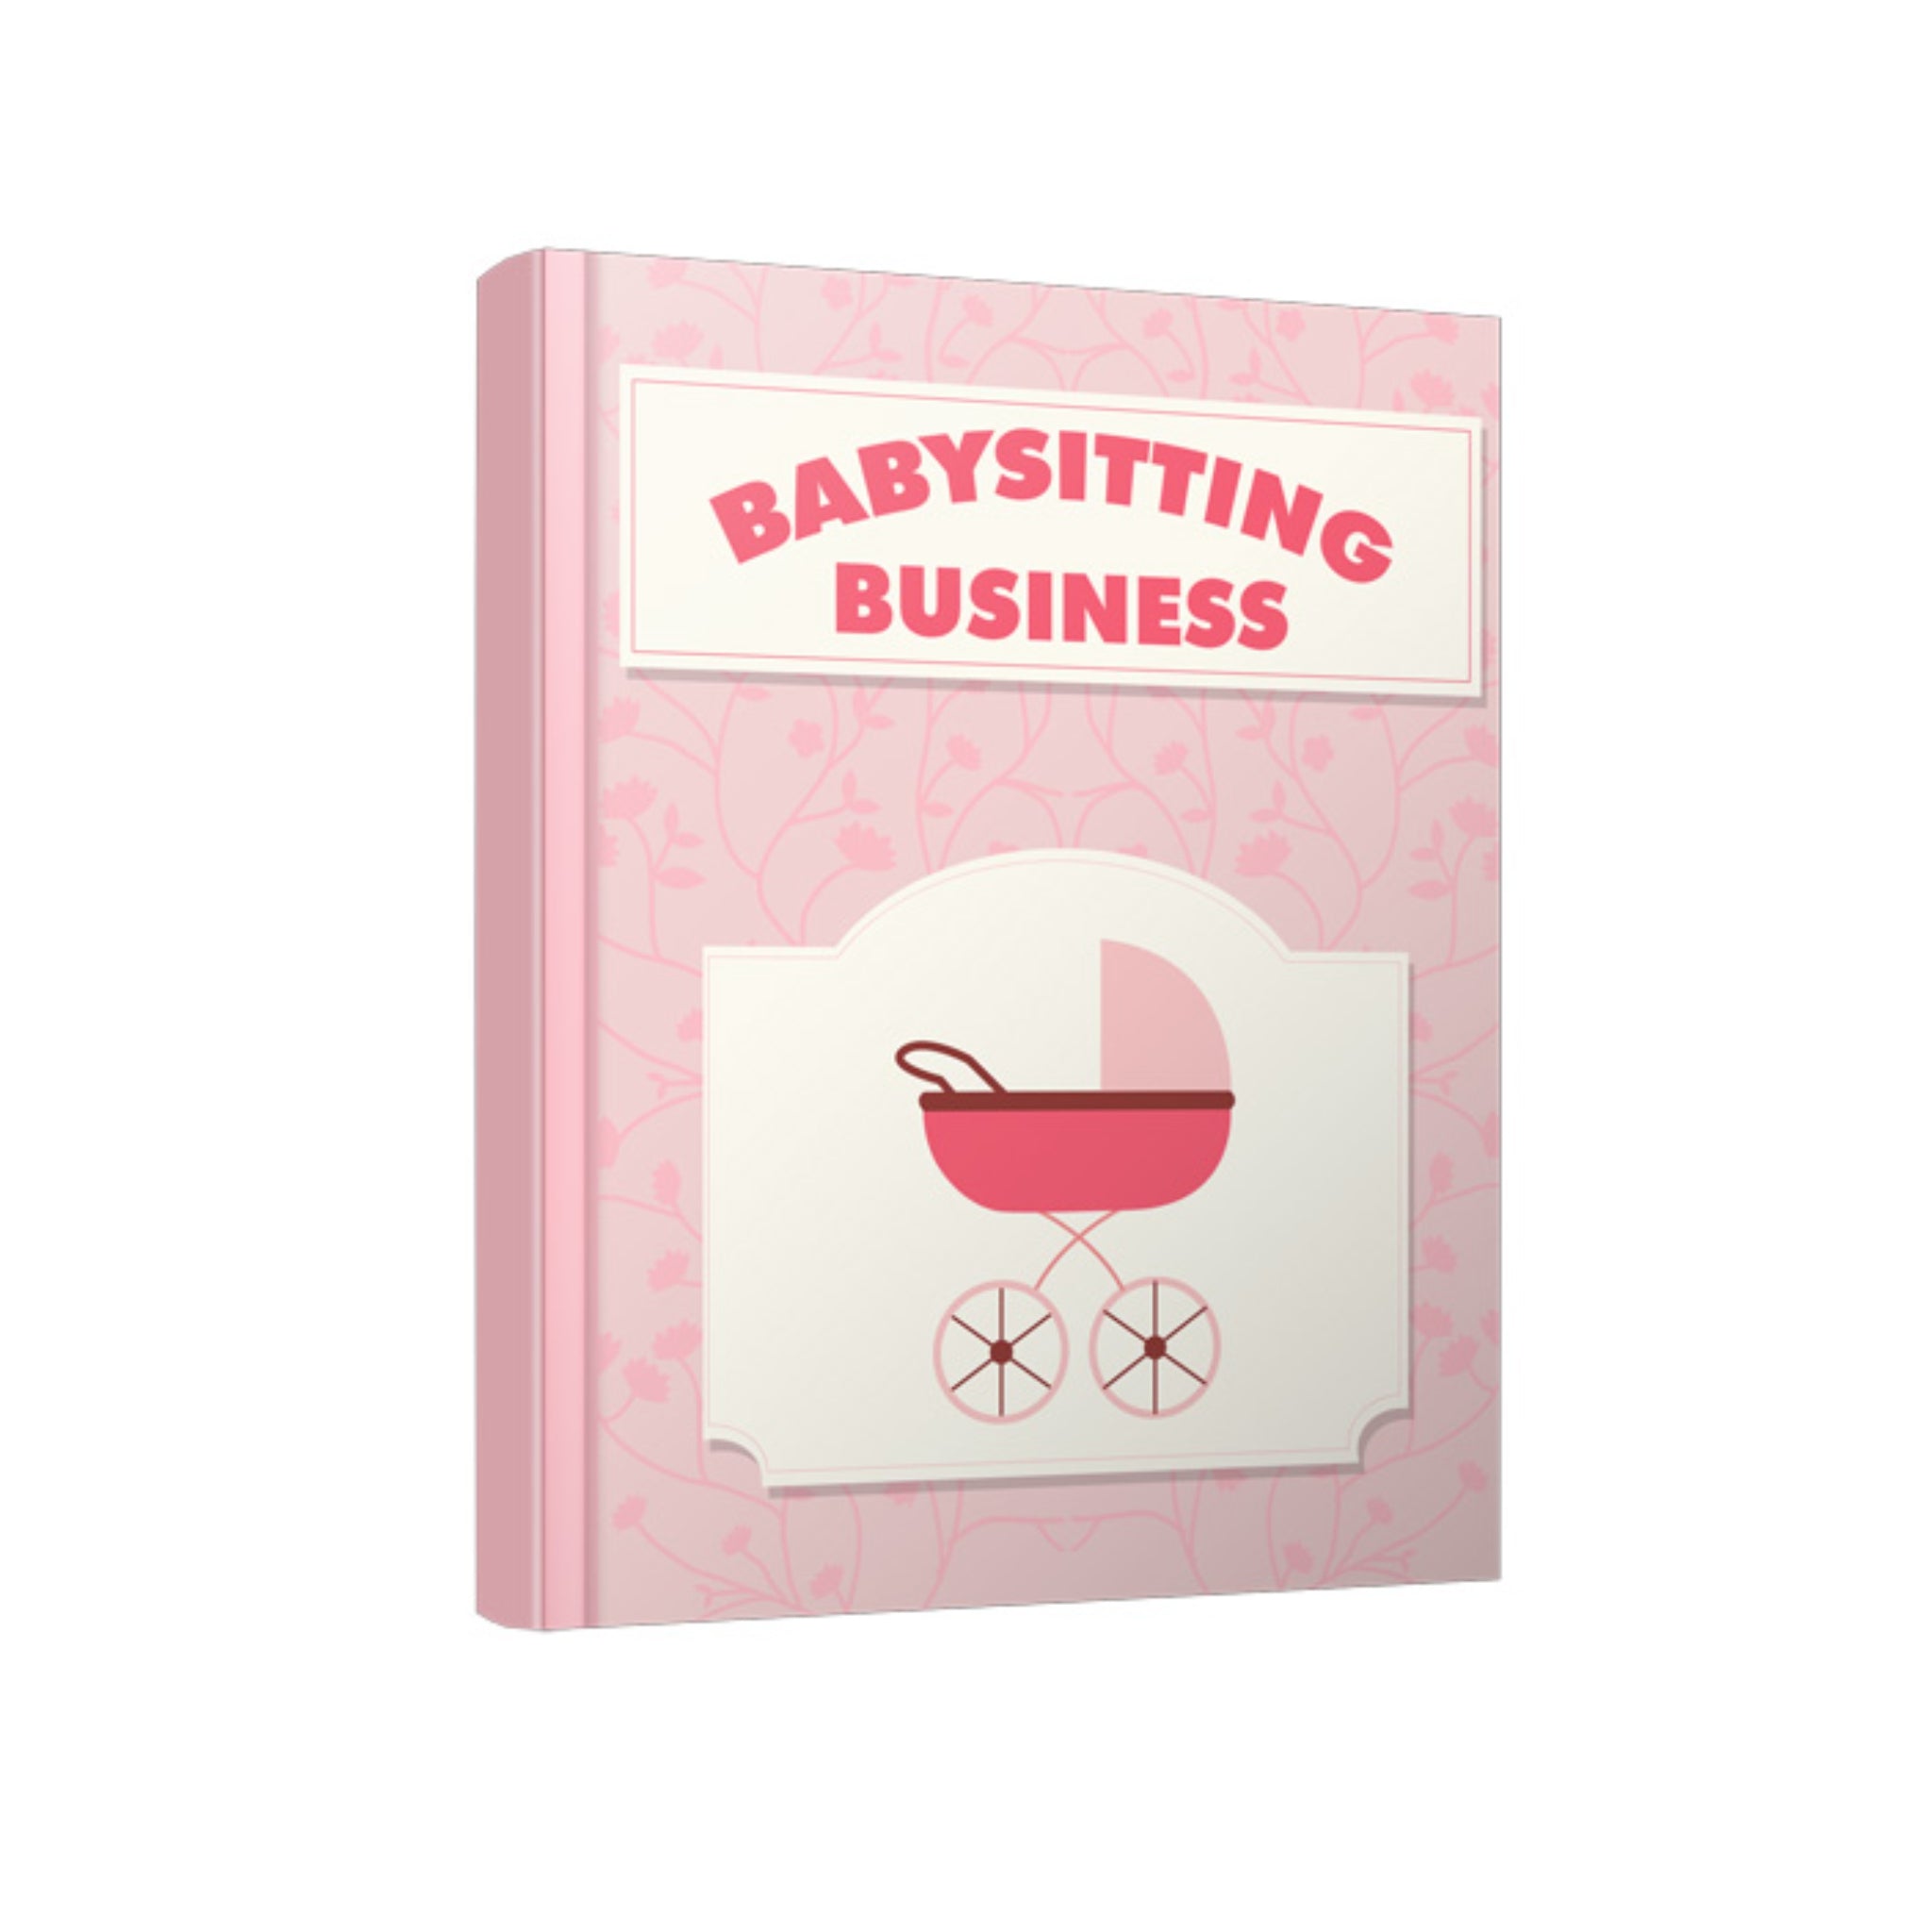 Babysitting Business Ebook